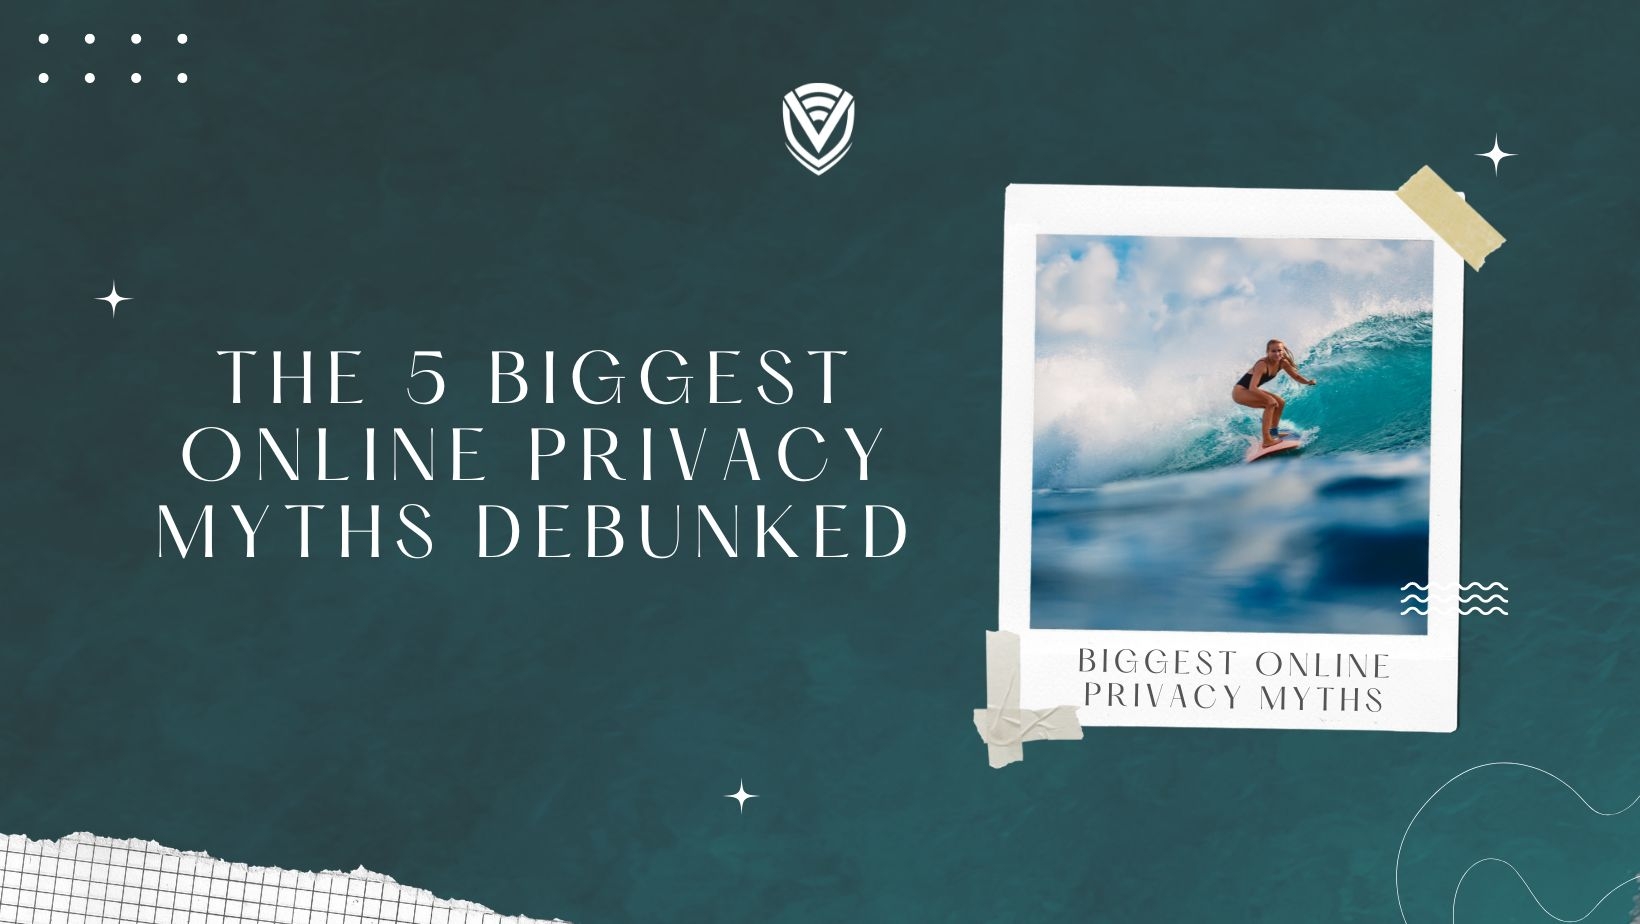 The 5 Biggest Online Privacy Myths Debunked